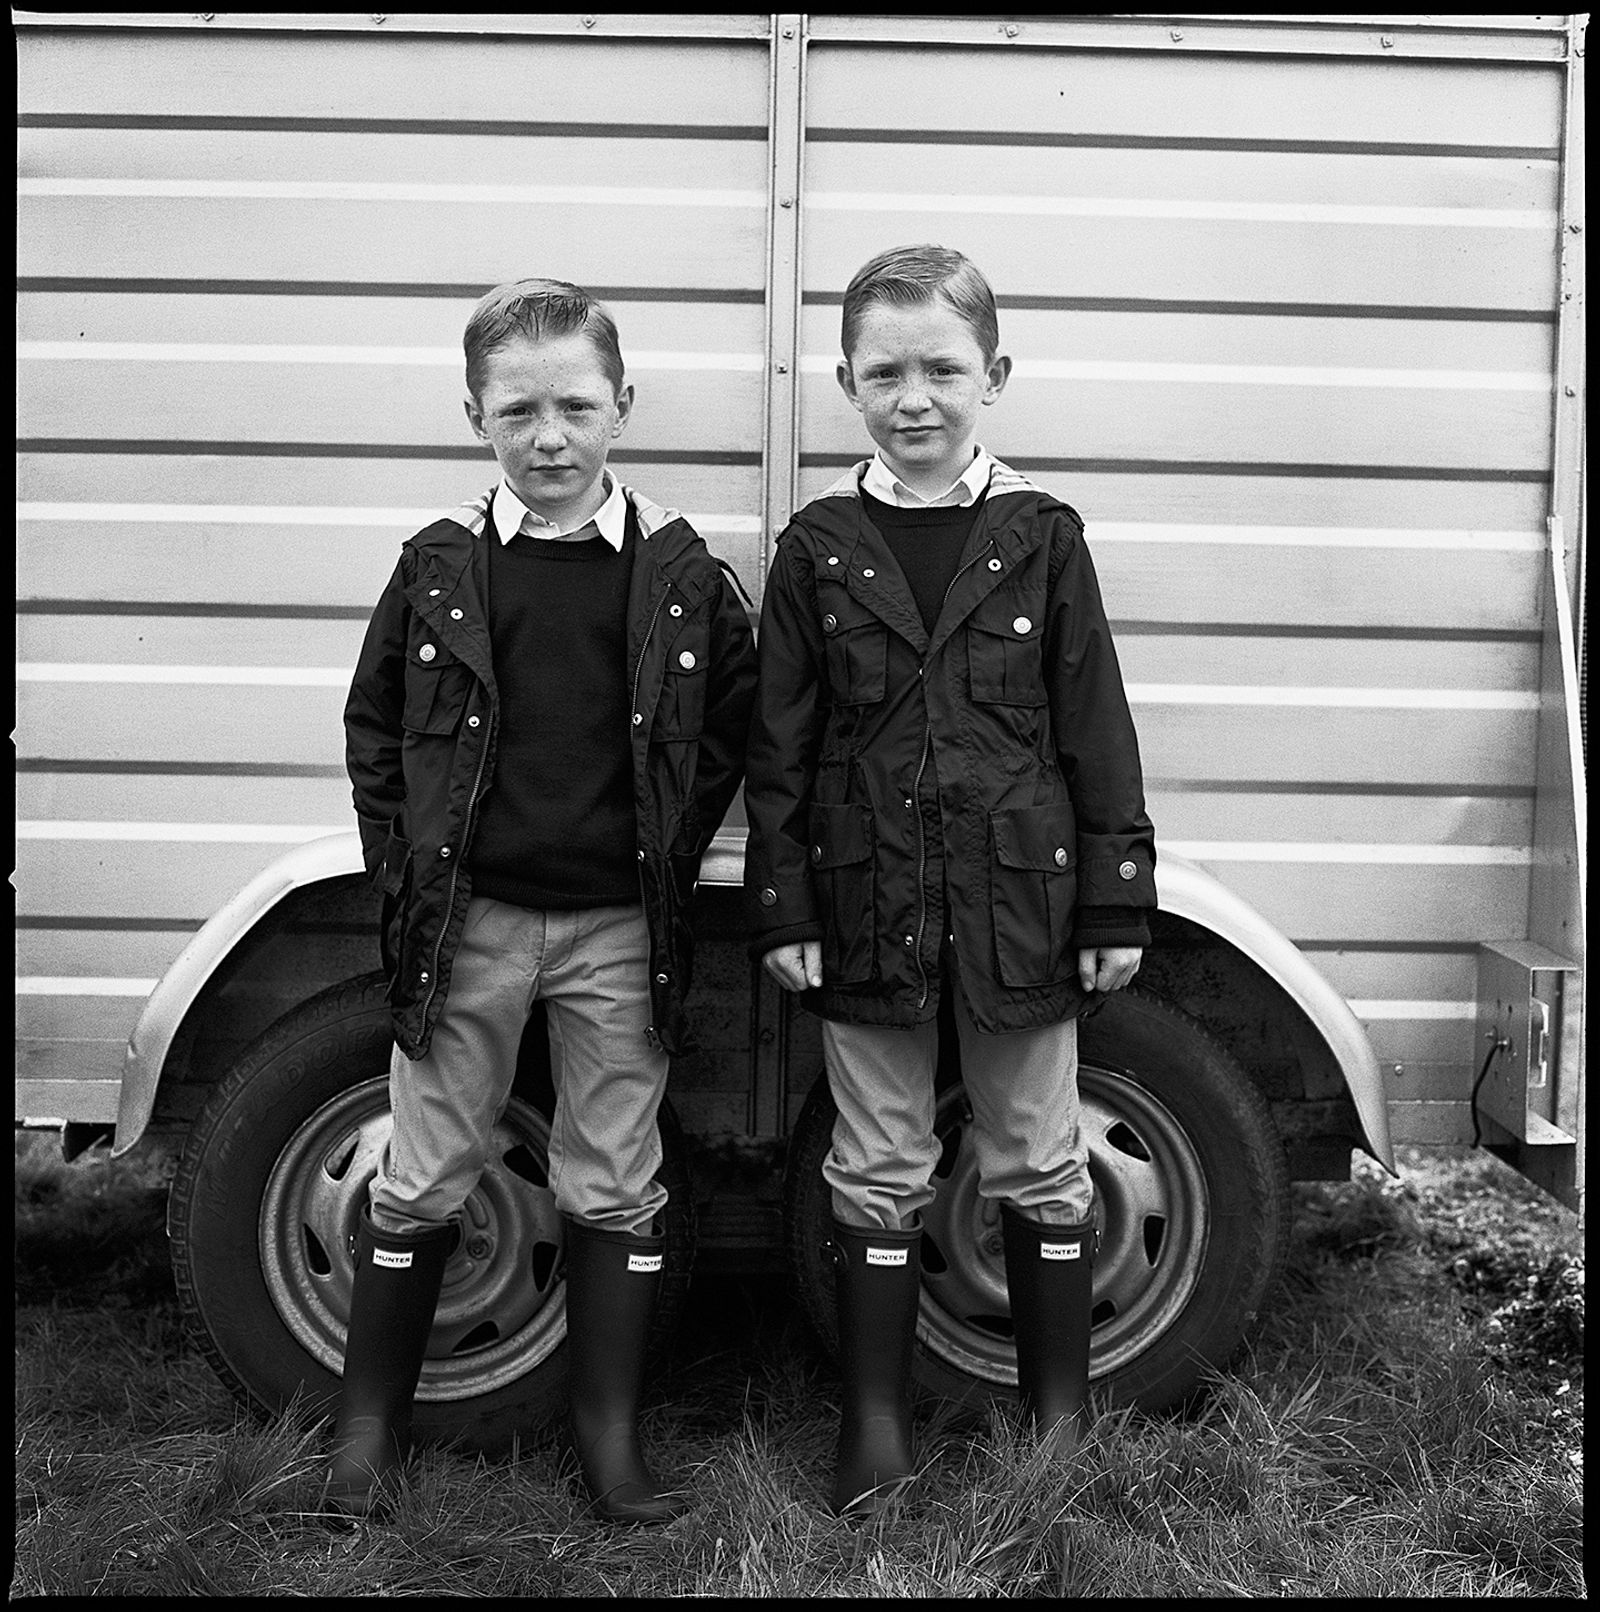 © Joseph-Philippe Bevillard - Johnny and Michael, Twins, Ballinasloe, Galway, Ireland 2015